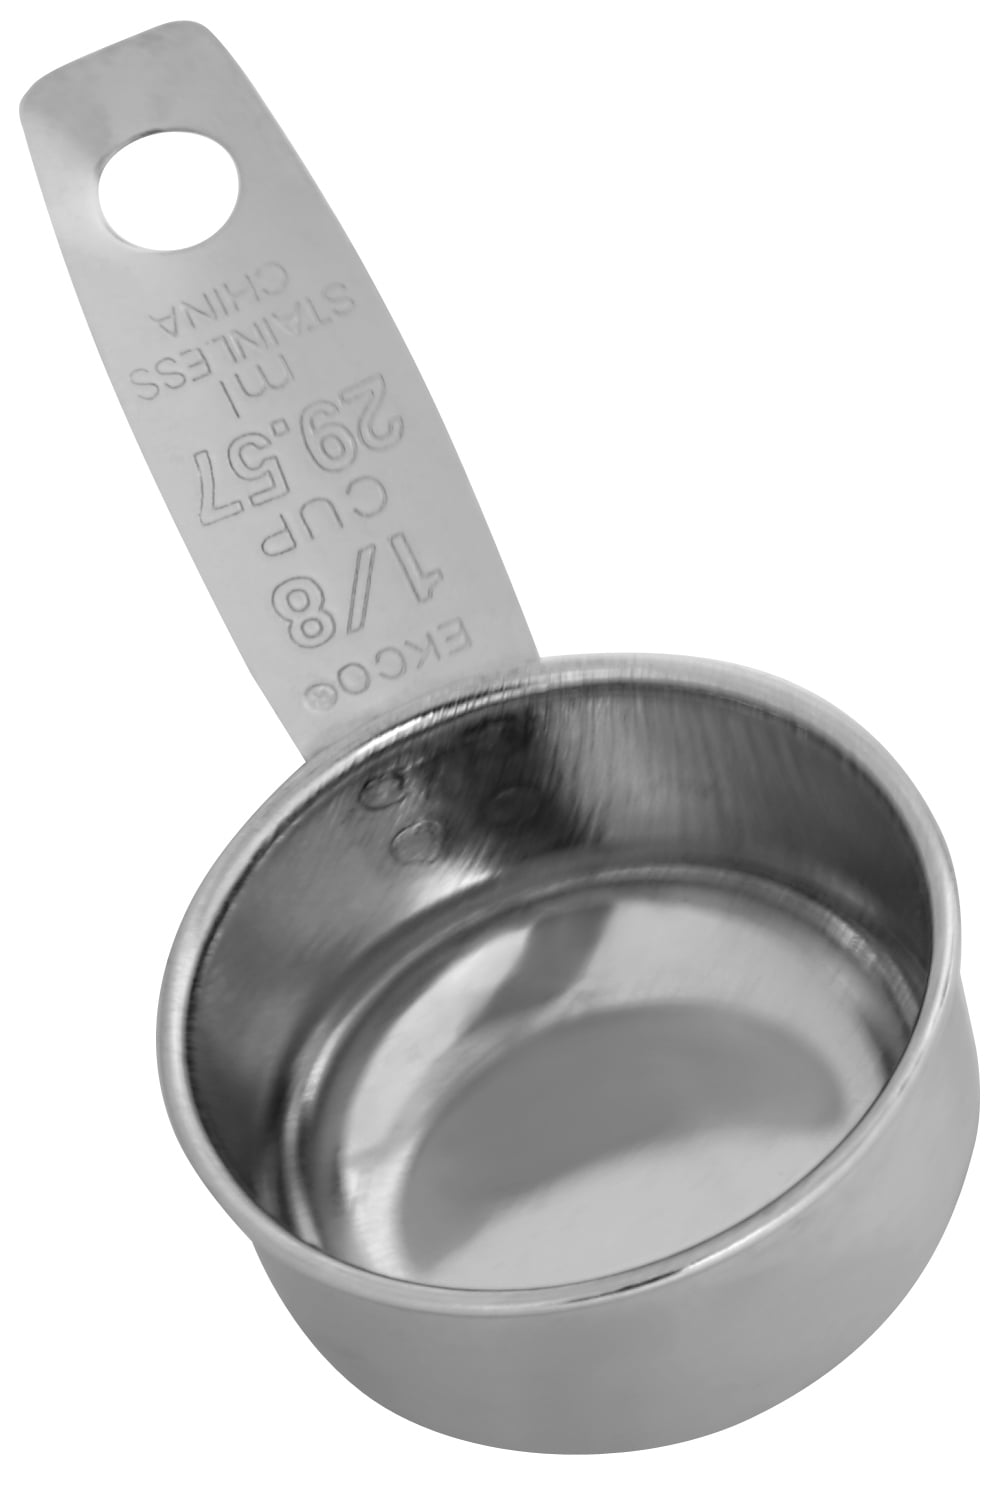 Ekco Measuring Cups Nesting Scoop Spoons Both Ends Vintage White Plastic 